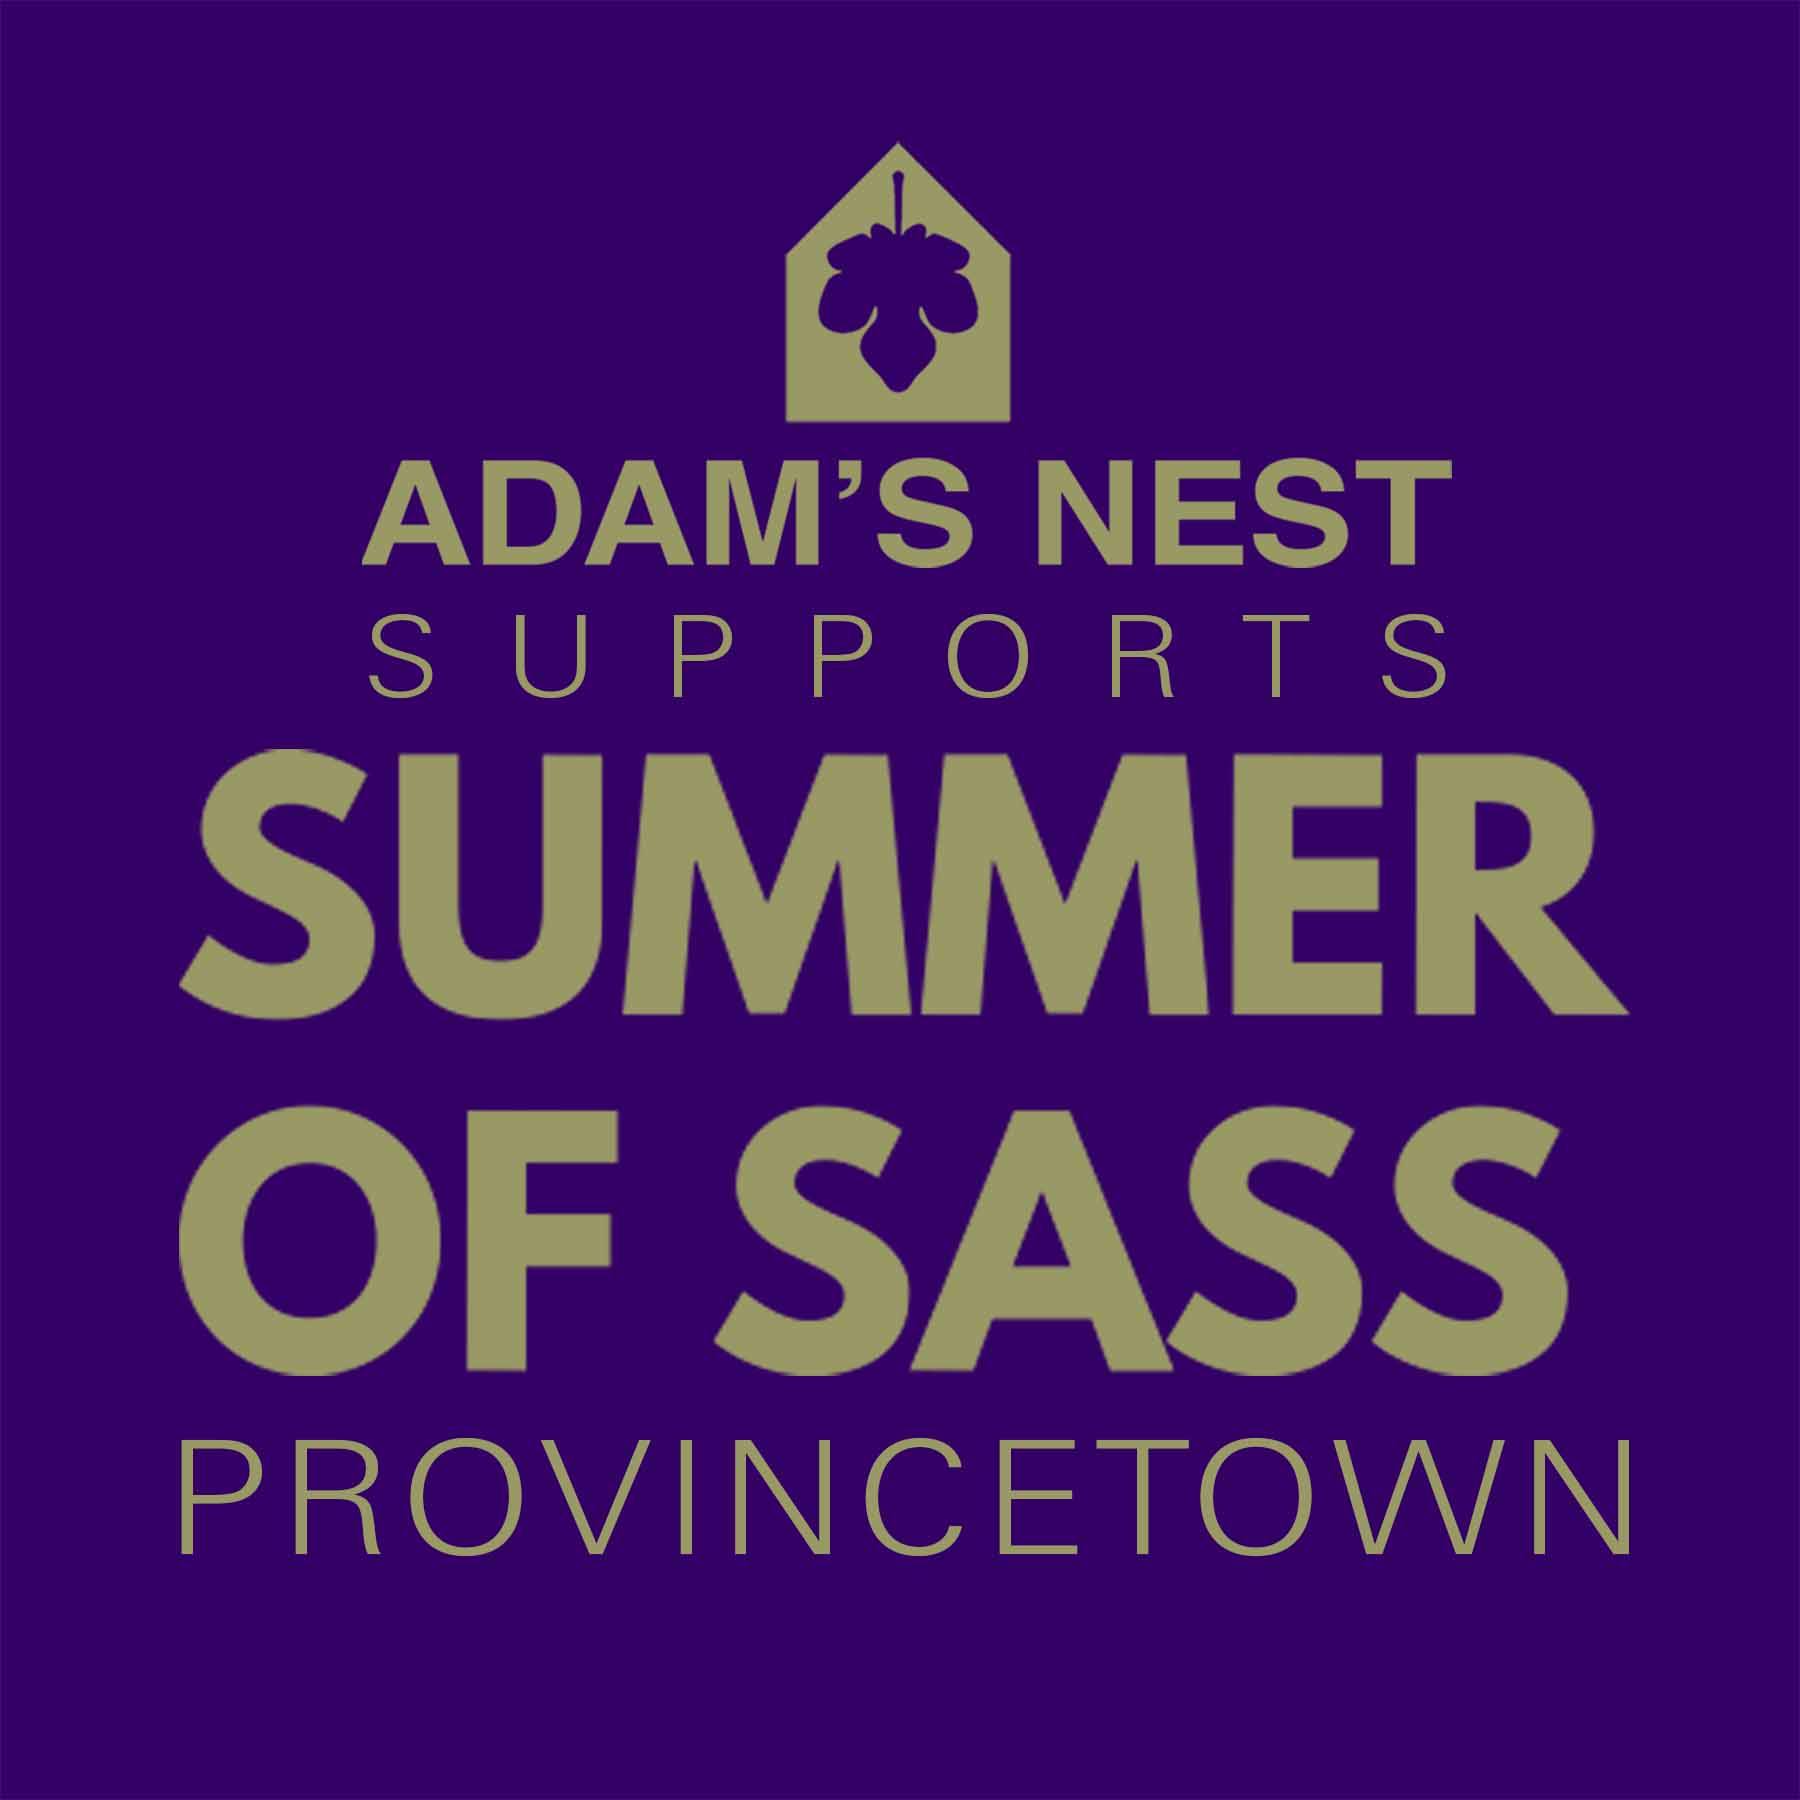 adam's nest supports summer of sass provincetown